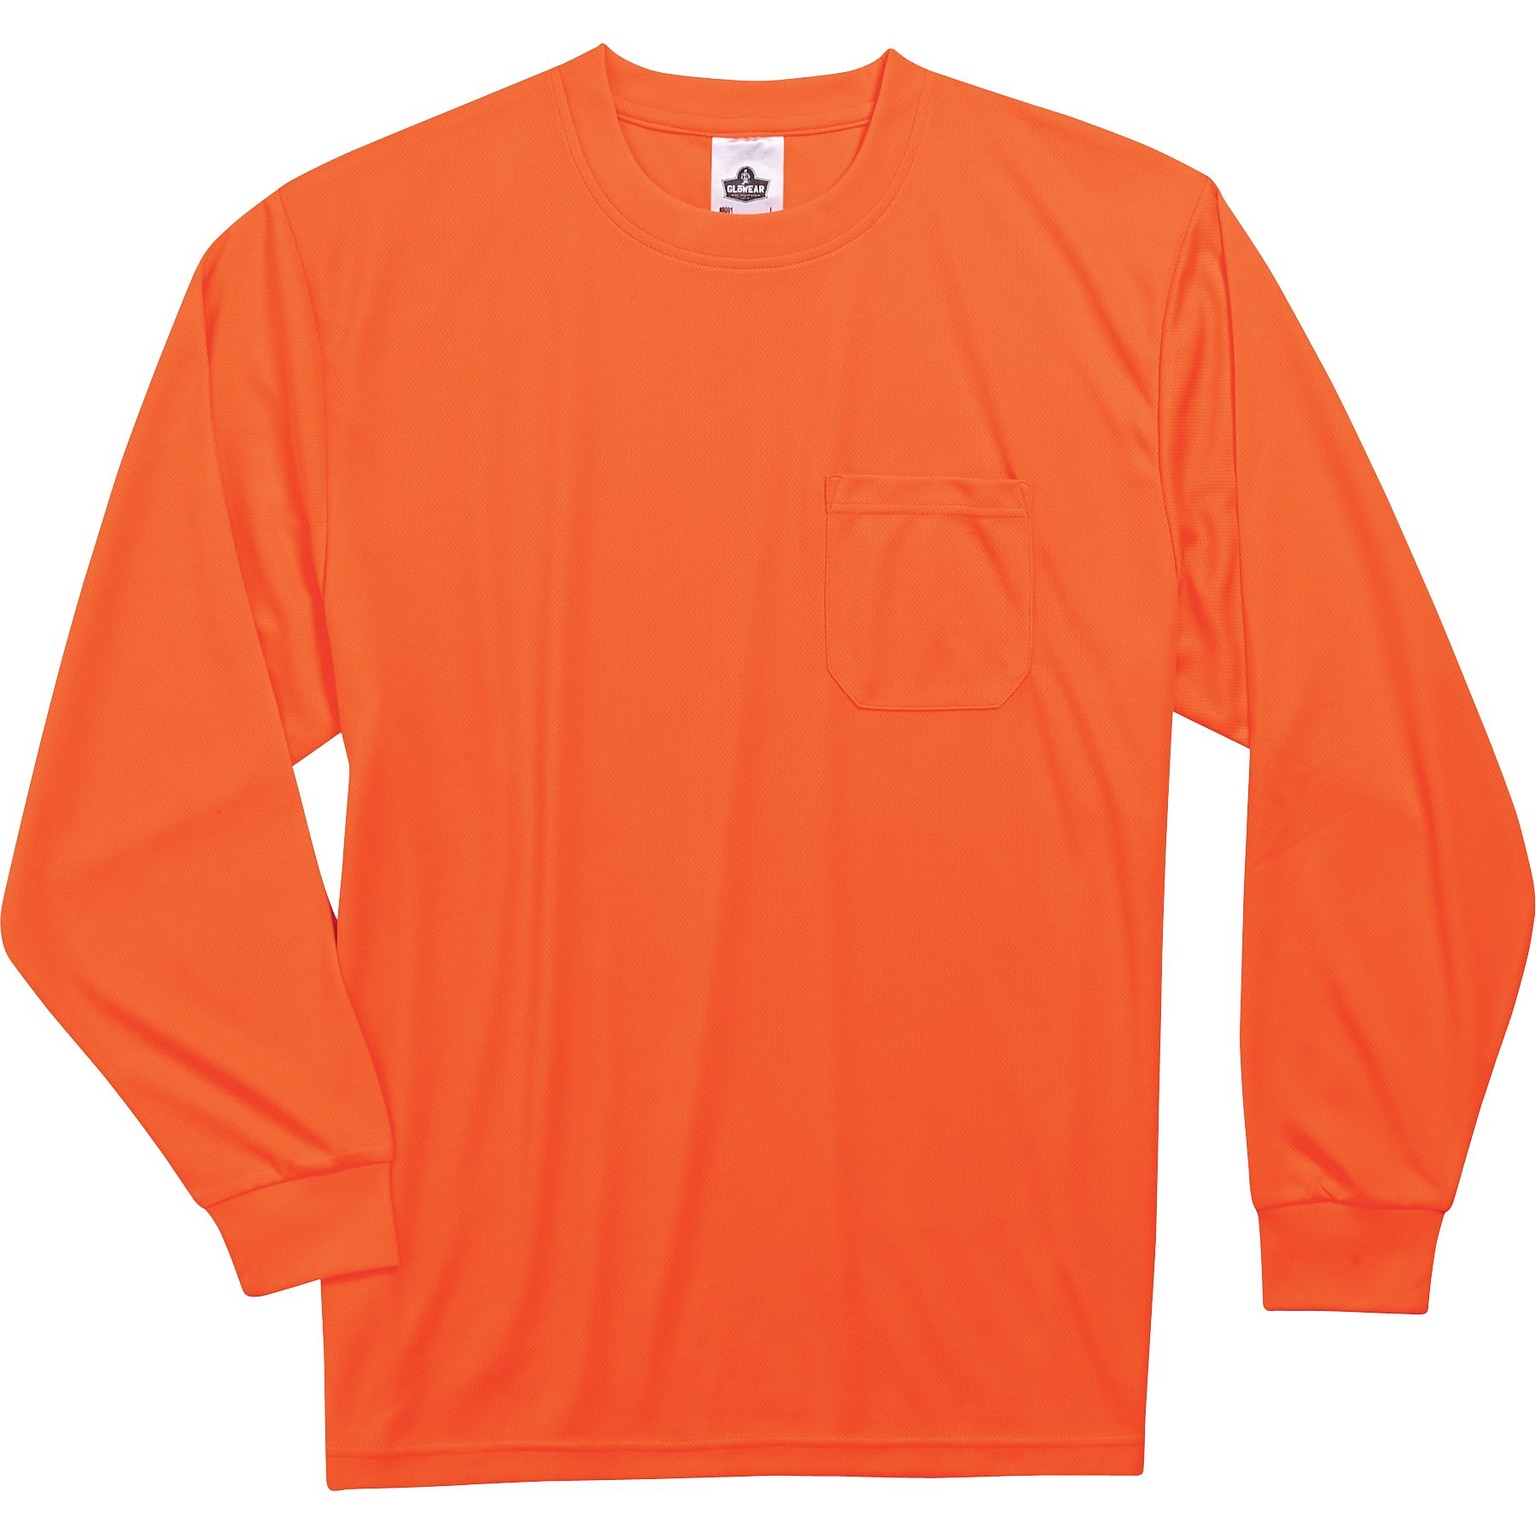 Ergodyne GloWear 8091 High Visibility Long Sleeve T-Shirt, Orange, Small (21592)